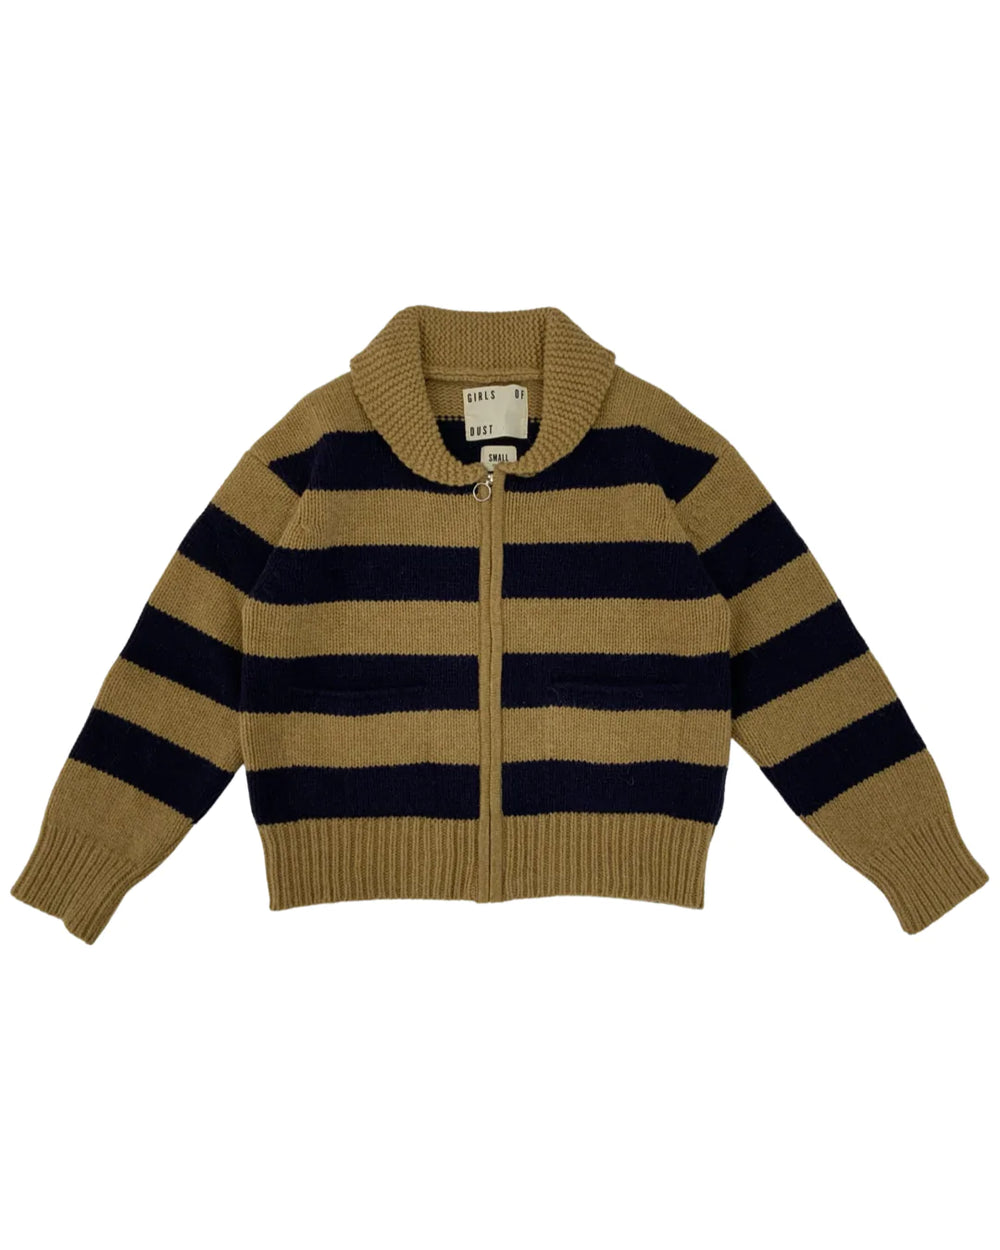 Pirate Cardigan - Shetland Wool - Mustard/Blue Stripe